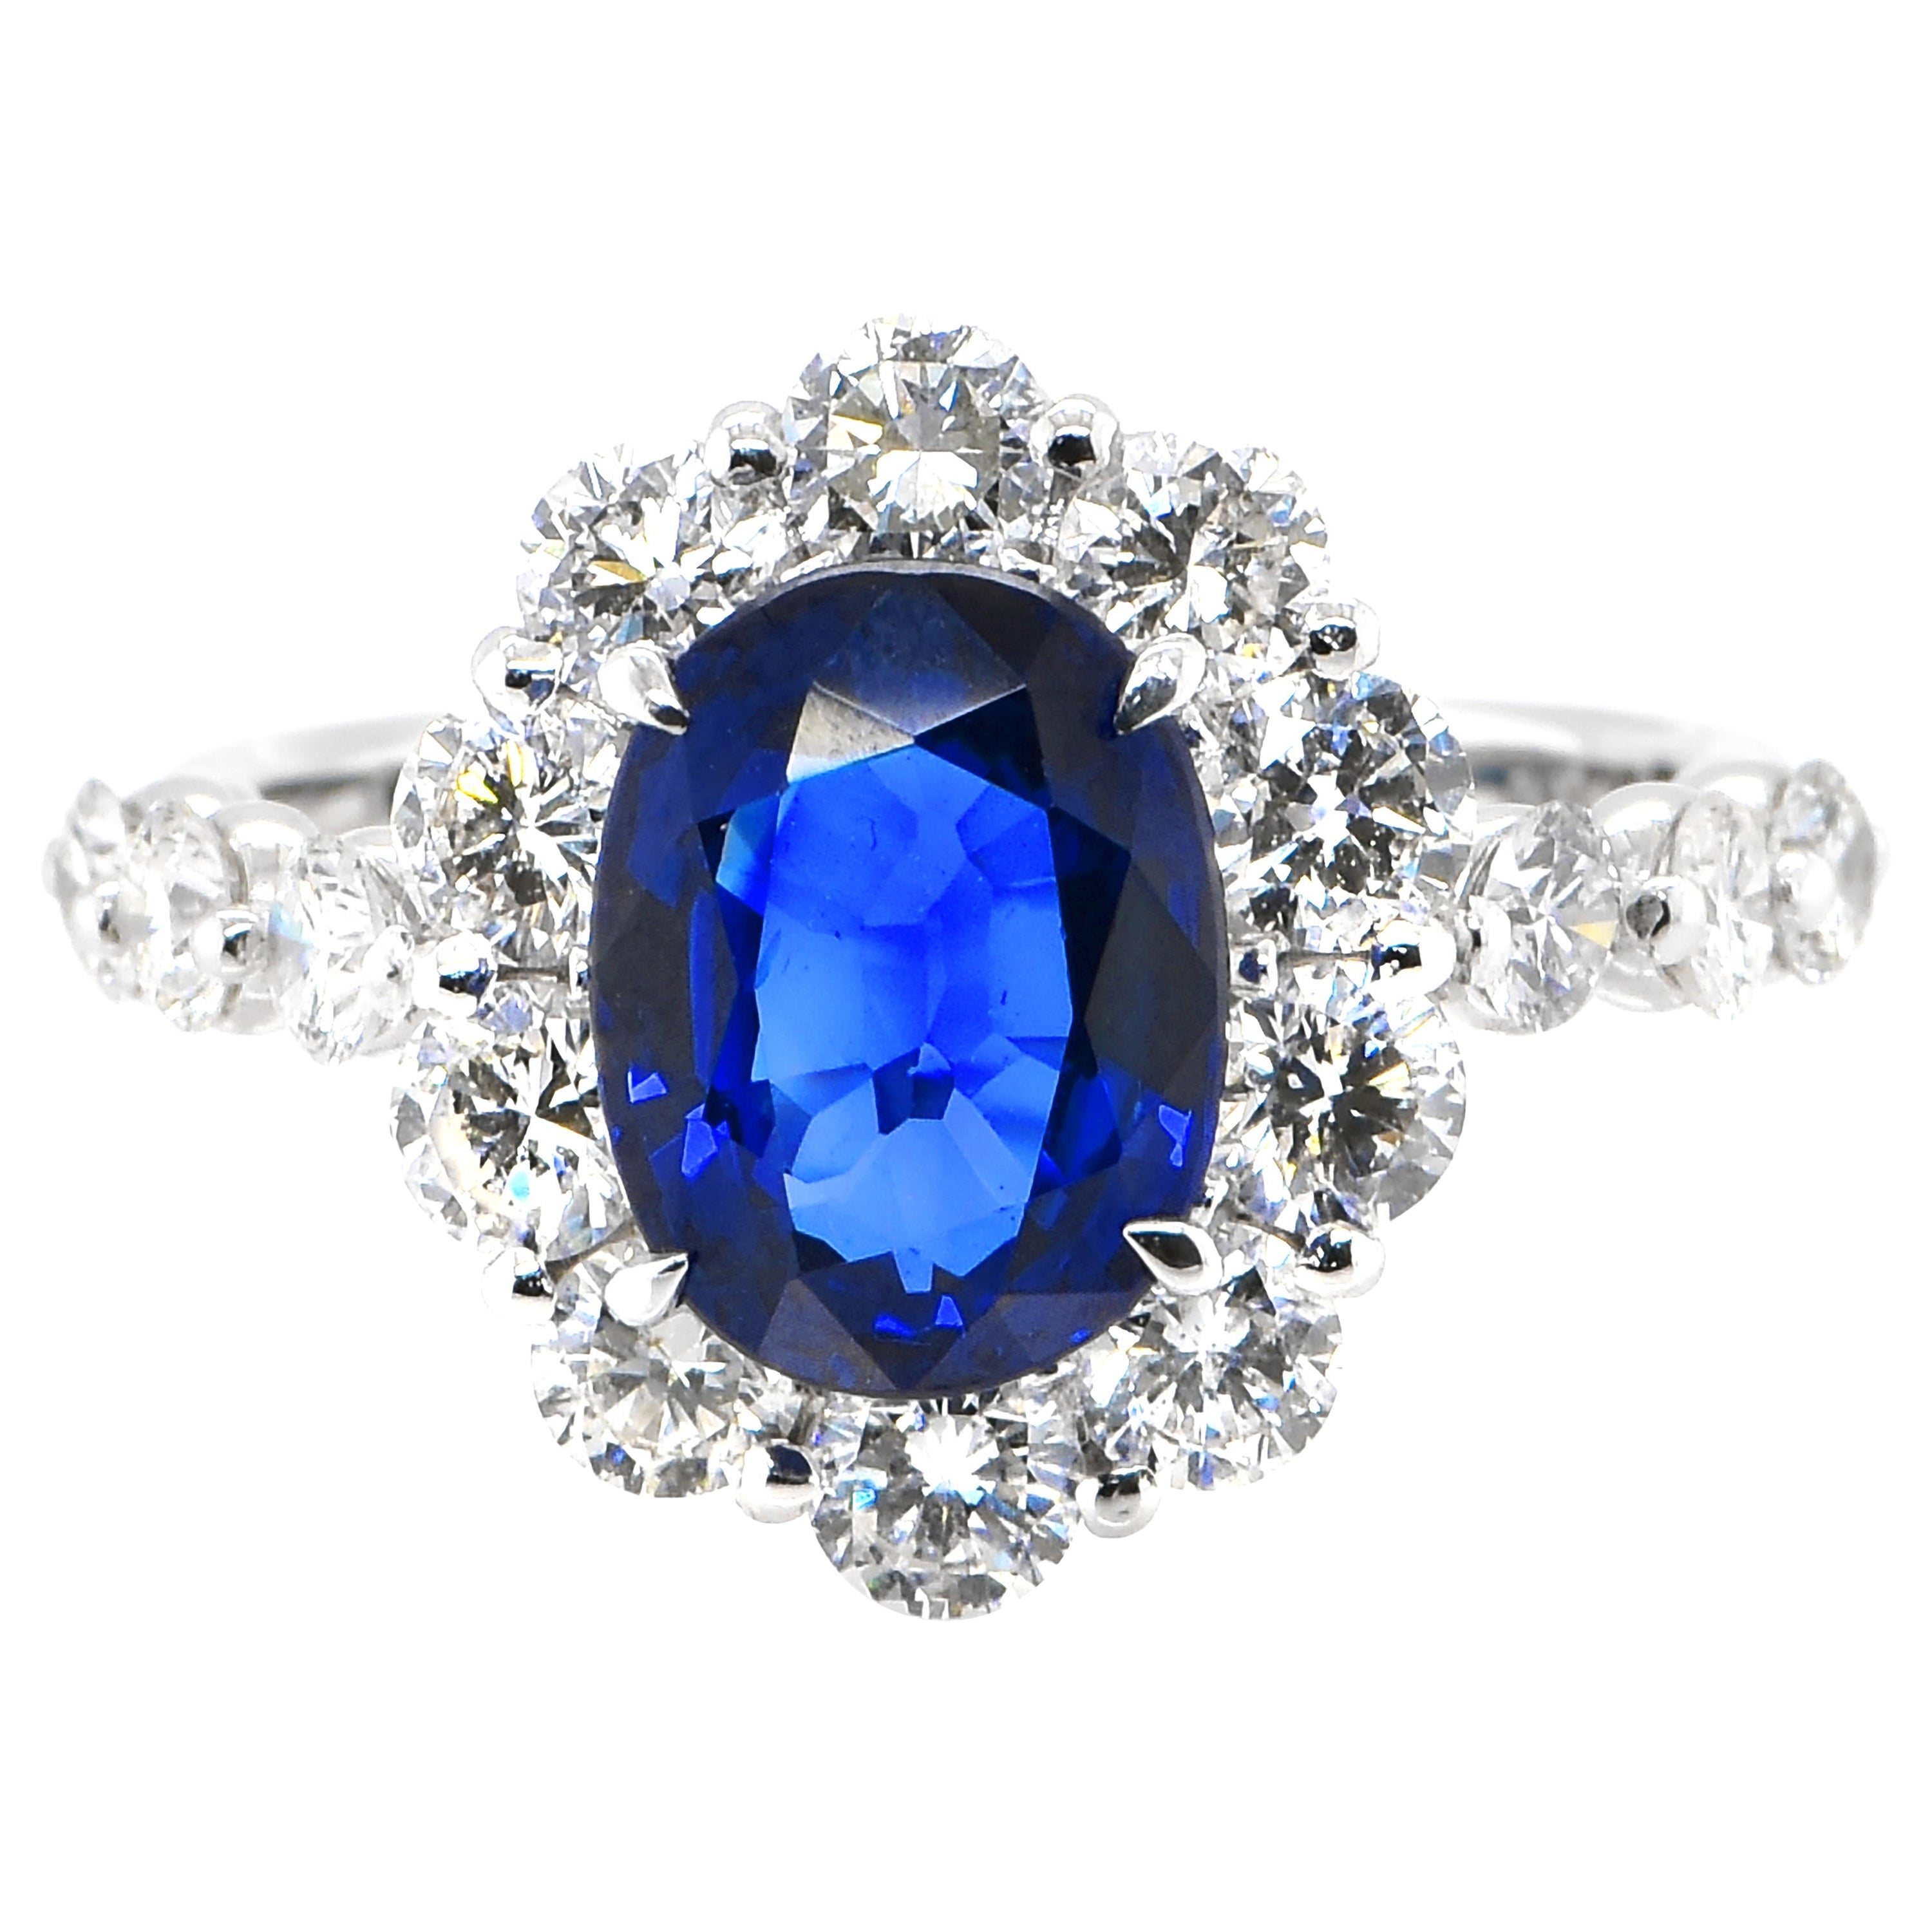 Bague halo de saphir bleu royal naturel de 2,95 carats et diamants